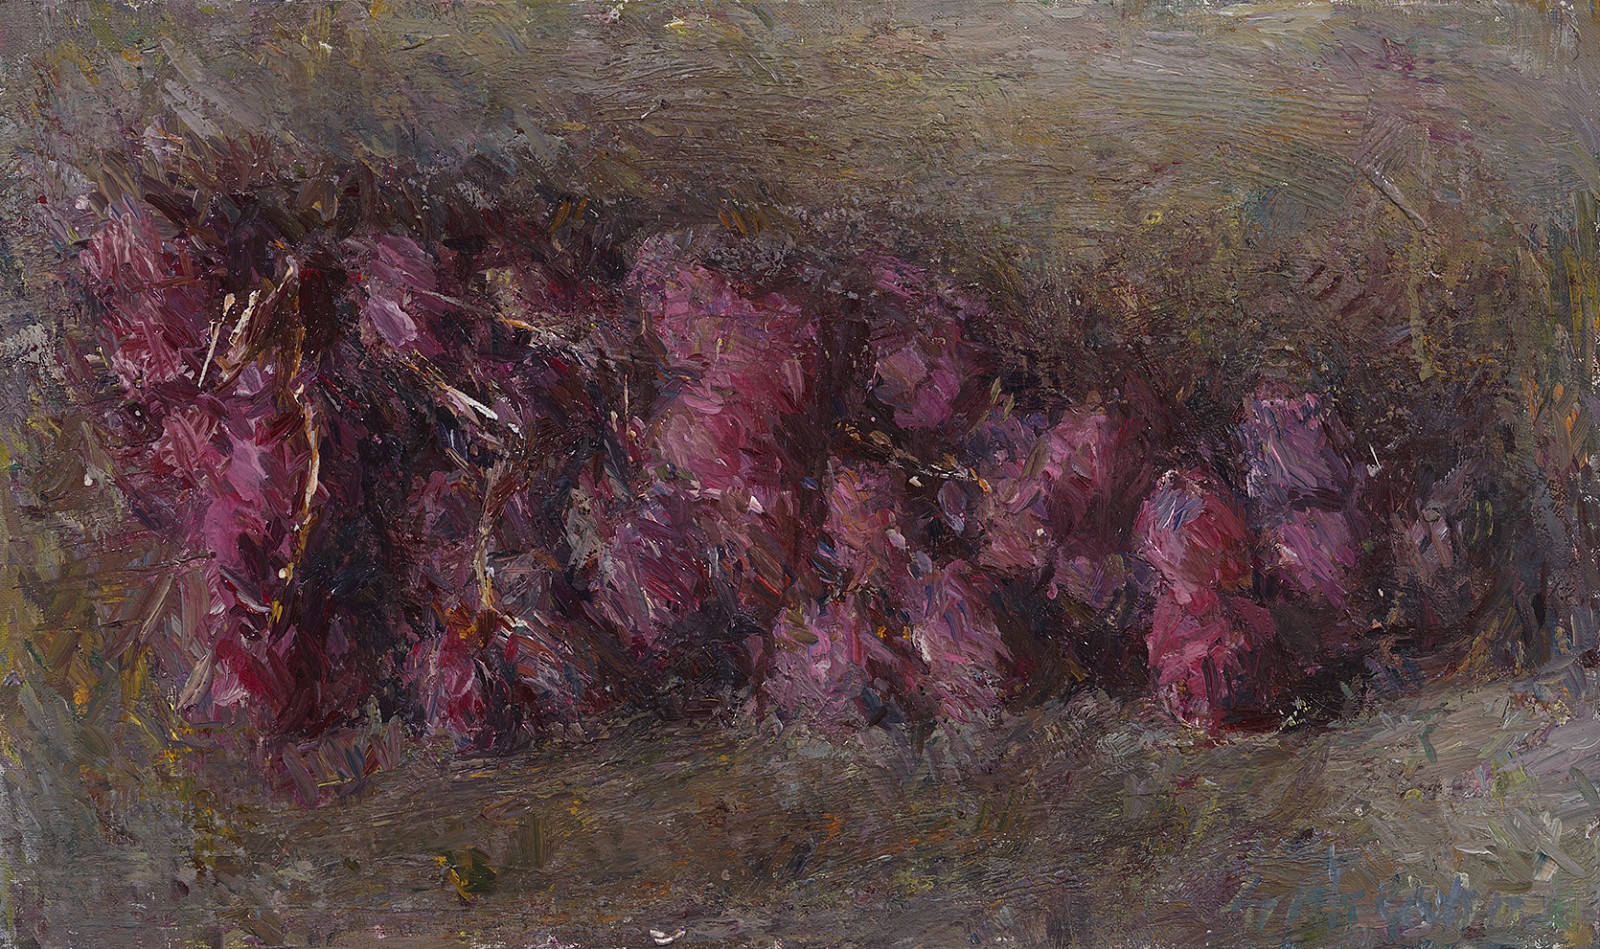 Daniel Enkaoua, Les raisins allongés
2018-19, Oil on canvas mounted on wood